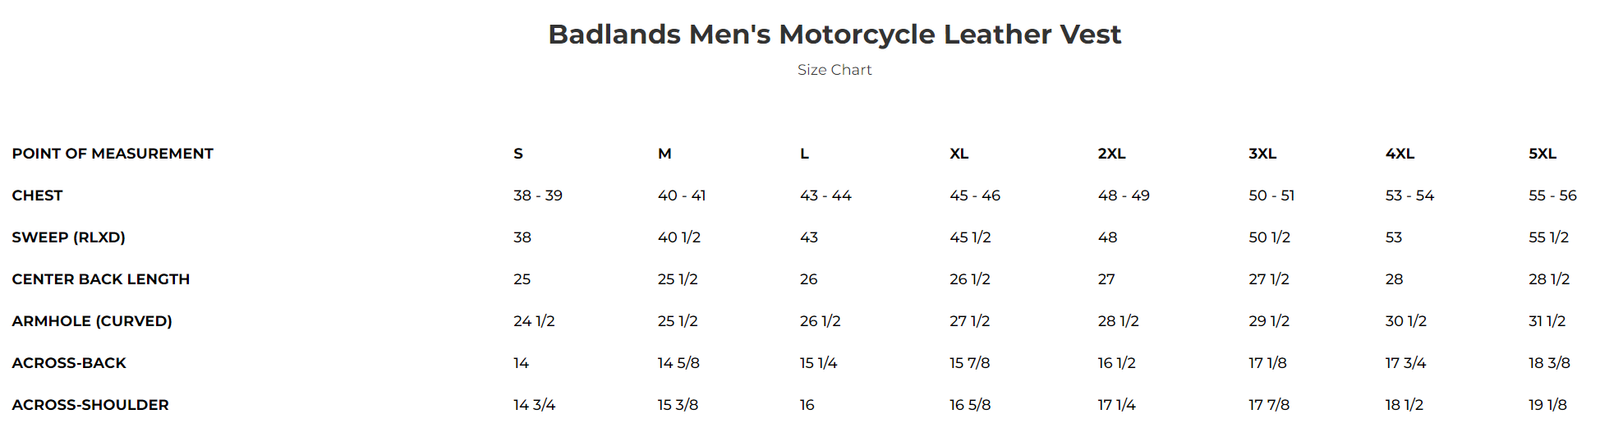 Leather Motorcycle Vest - Men's - Motorcycle Club - Badlands - FIM617CFD-FM